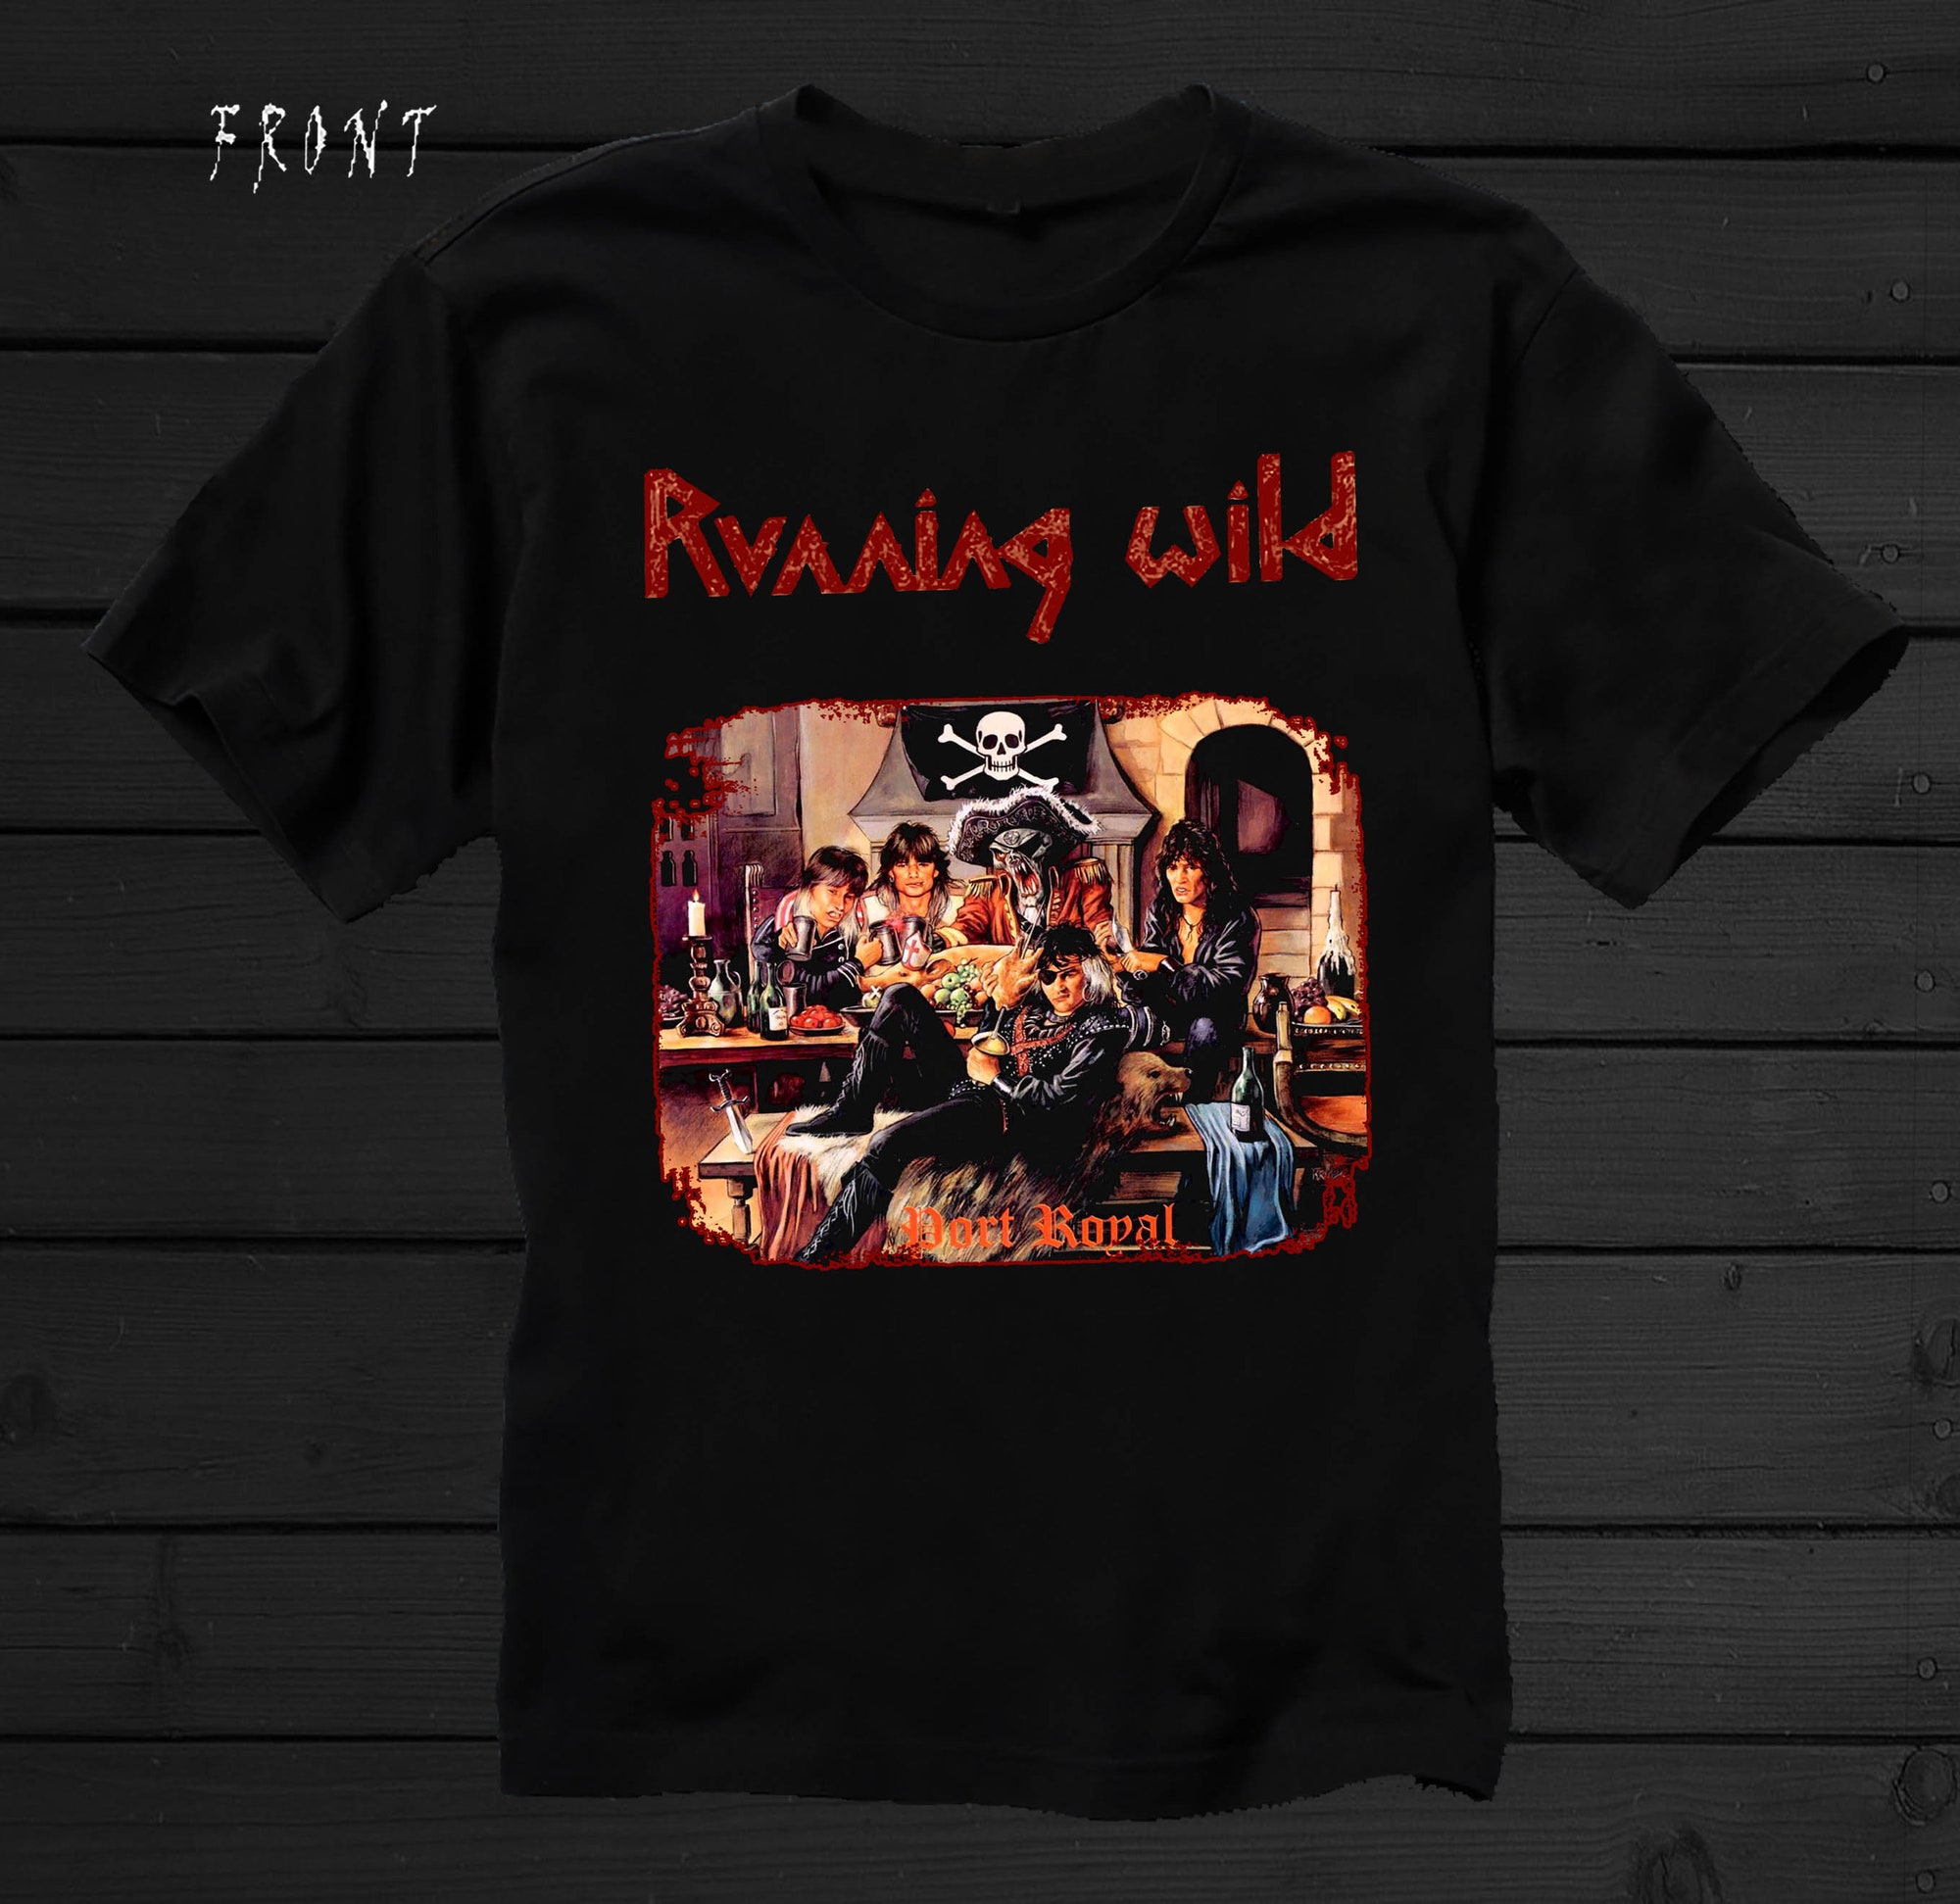 Running Wild - Port Royal t-shirt